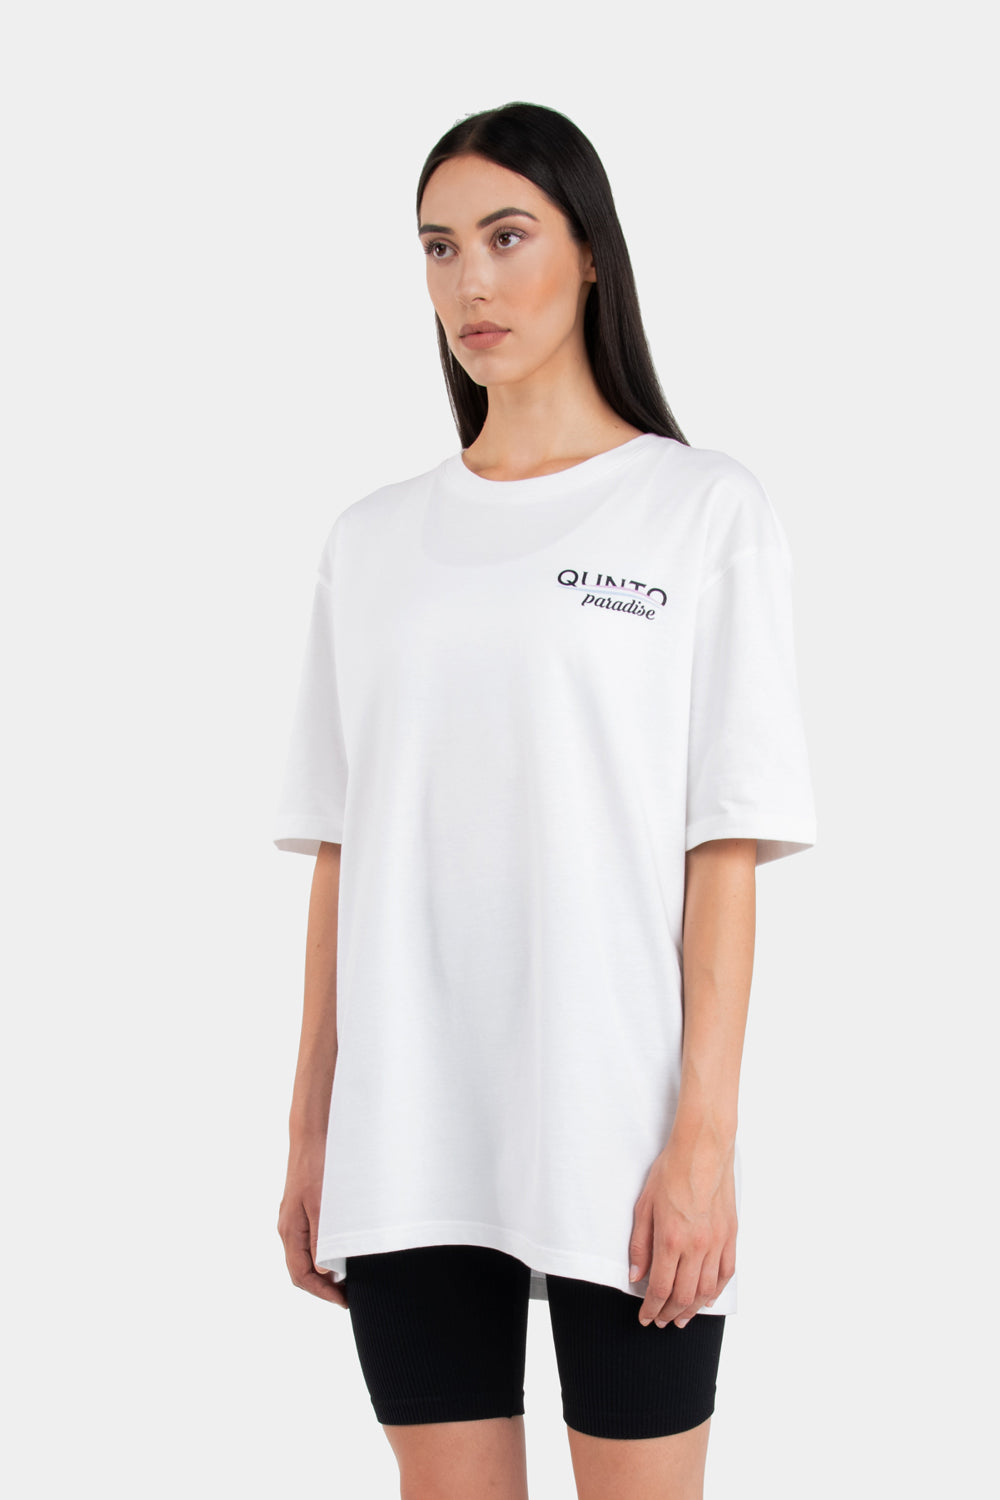 Speed Boat T-Shirt White